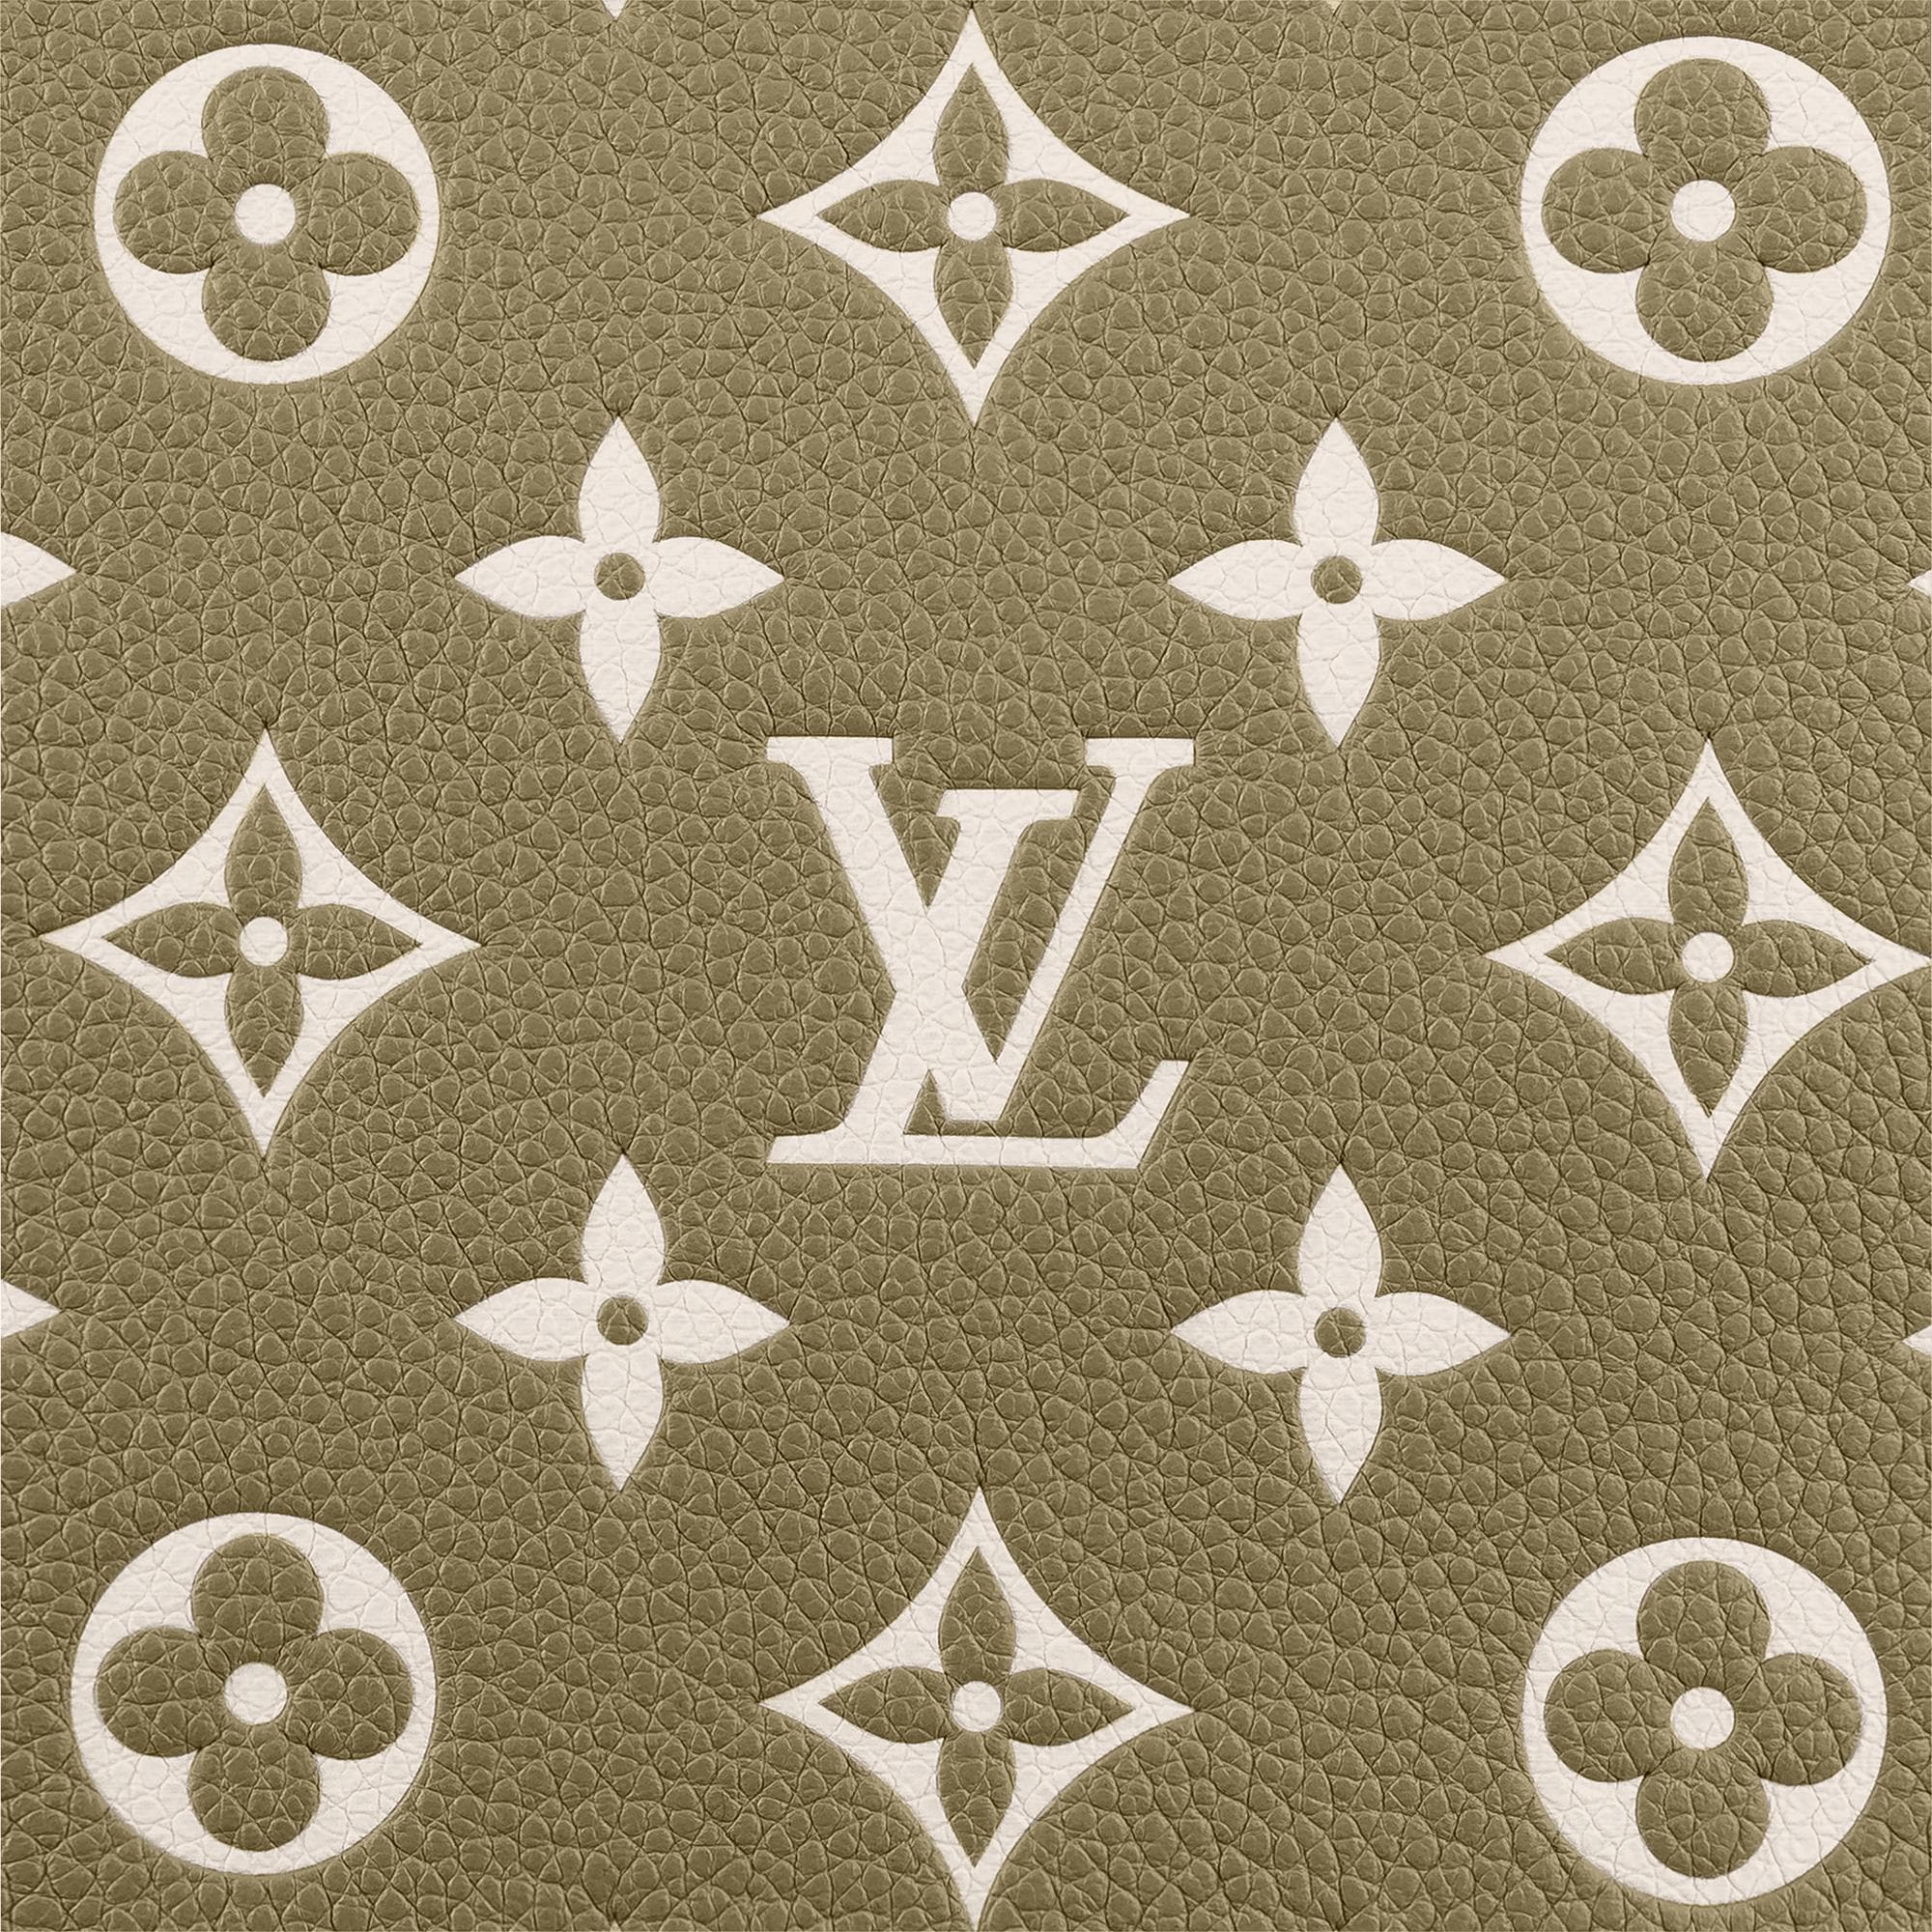 A brief history of Louis Vuitton's famous monogram